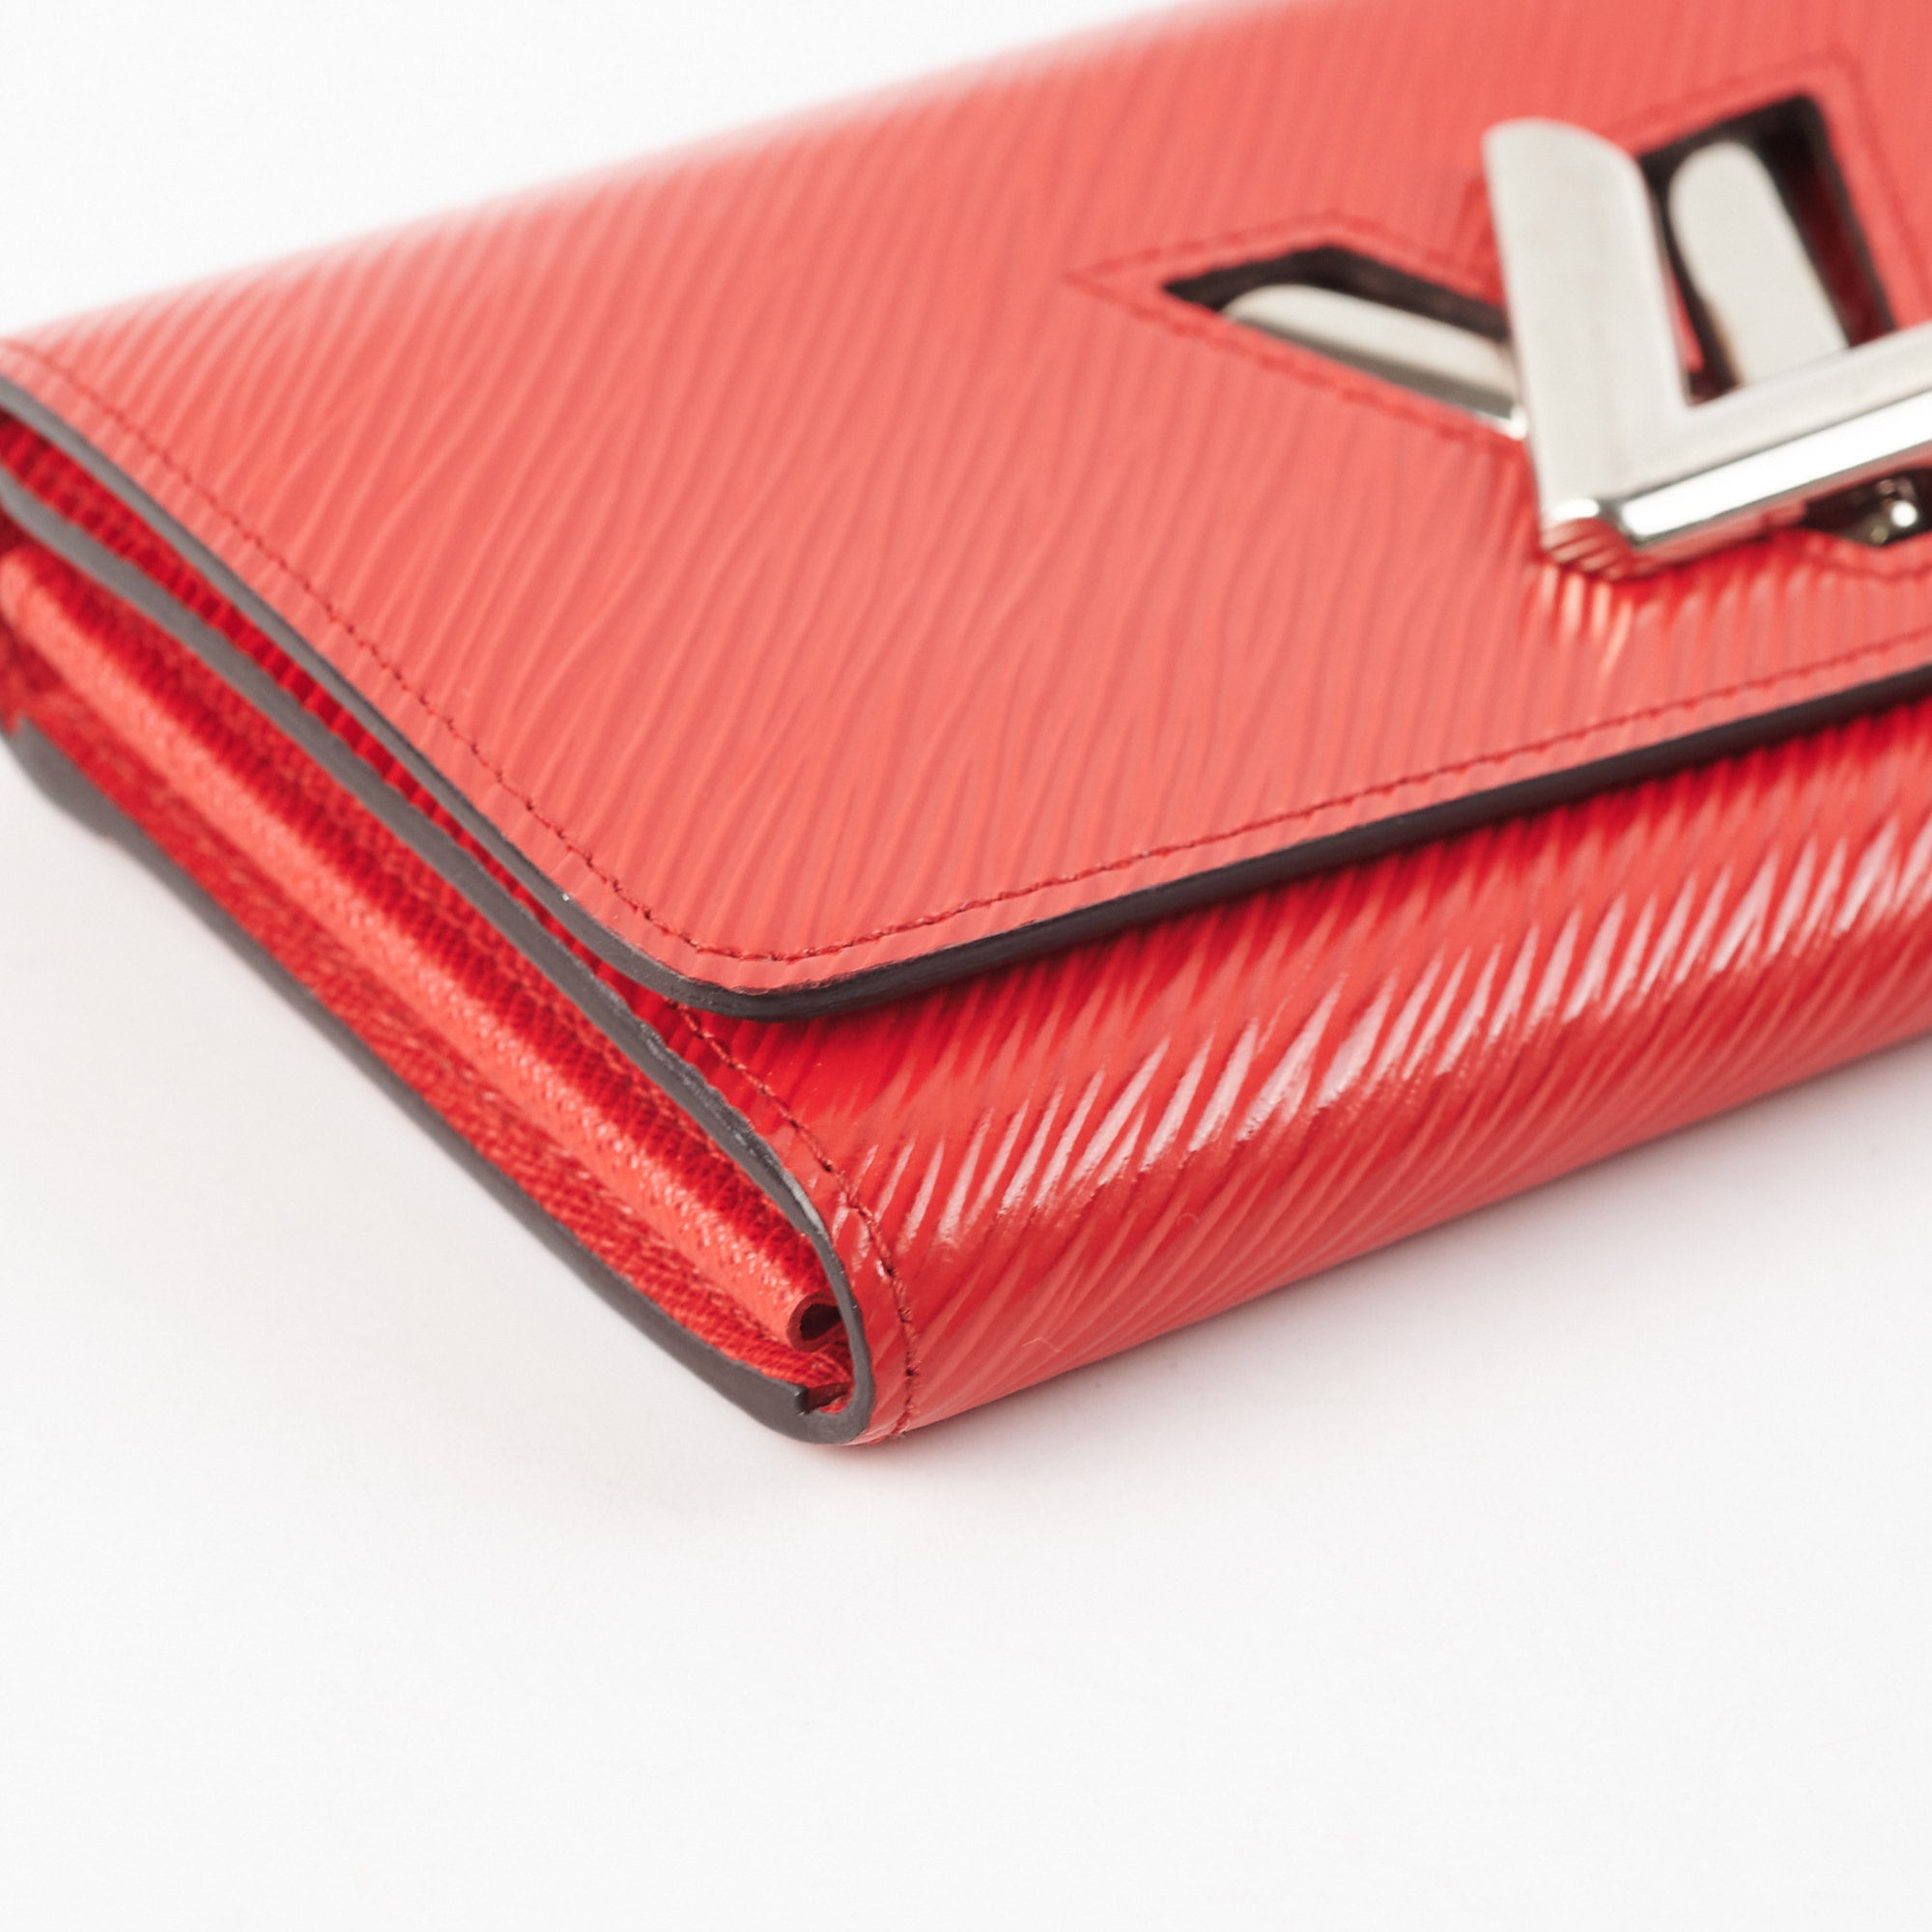 Poshbag Boutique - This Louis Vuitton Twist Wallet is in durable